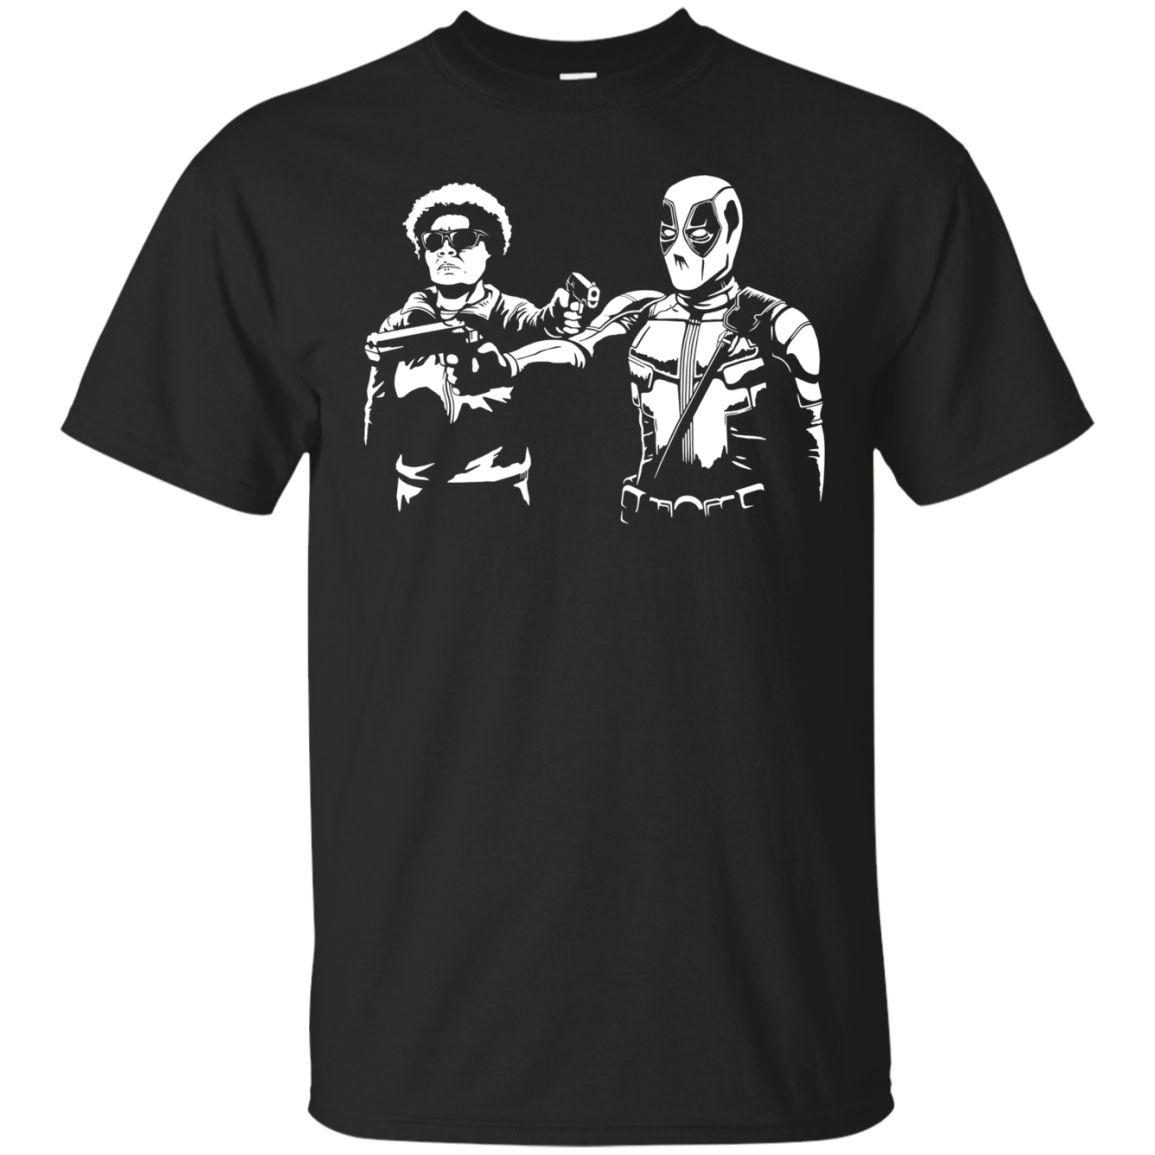 T-Shirts Black / S Pool Fiction T-Shirt